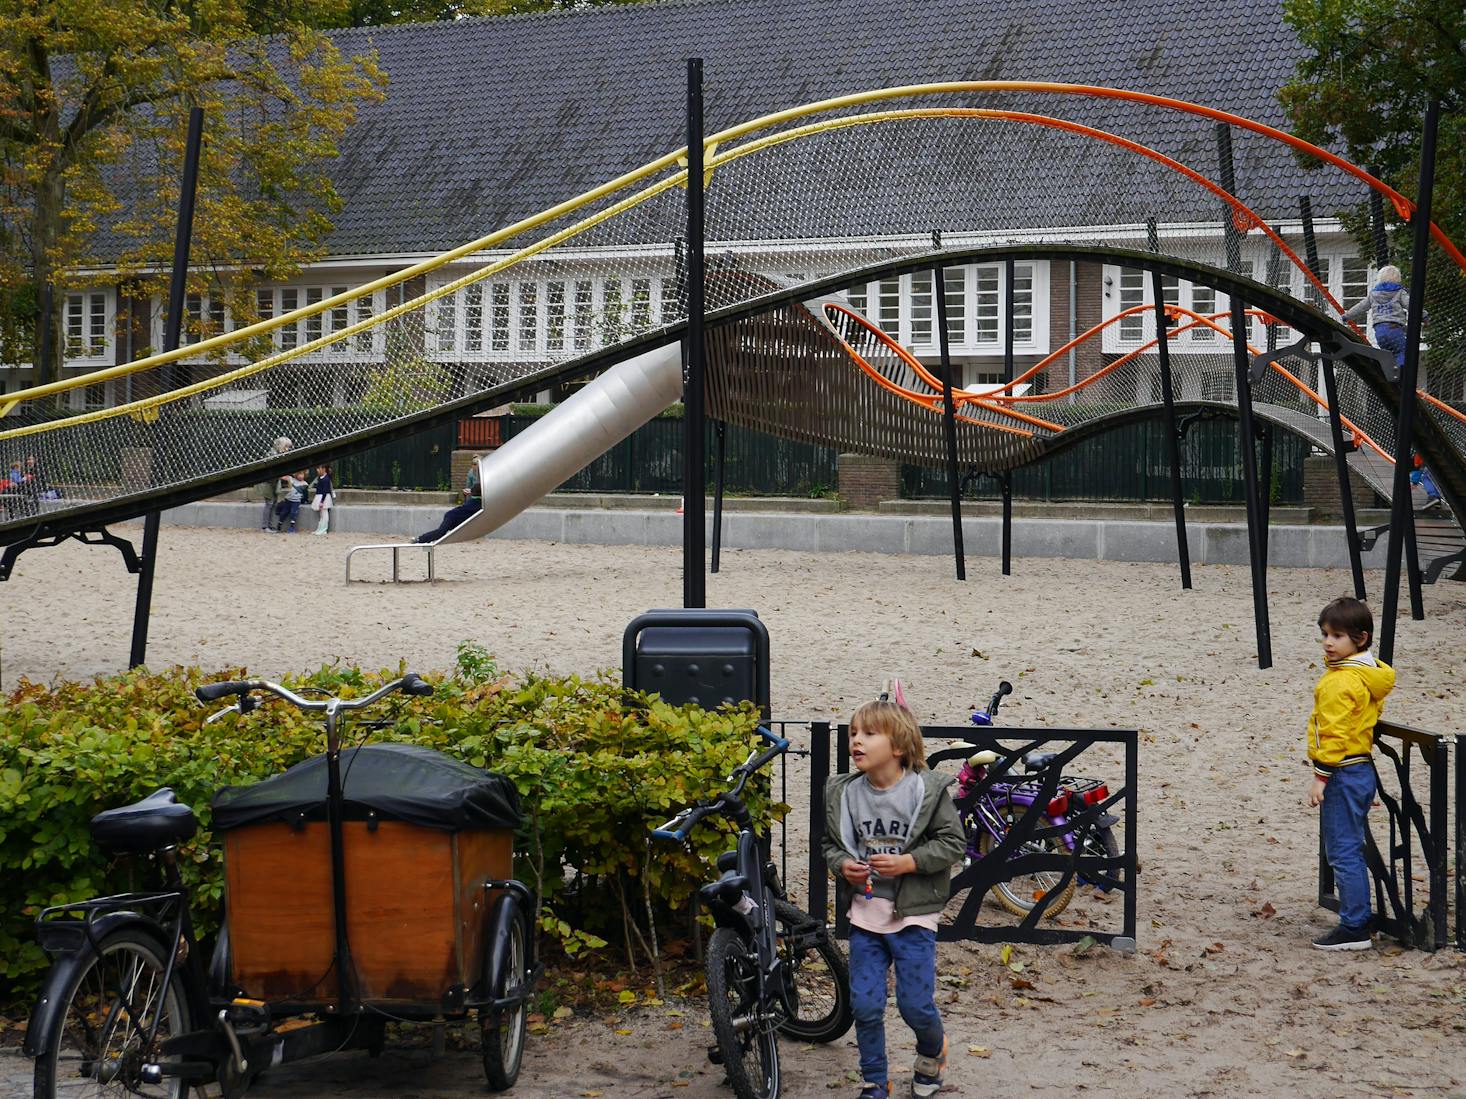 Playground in Amsterdam